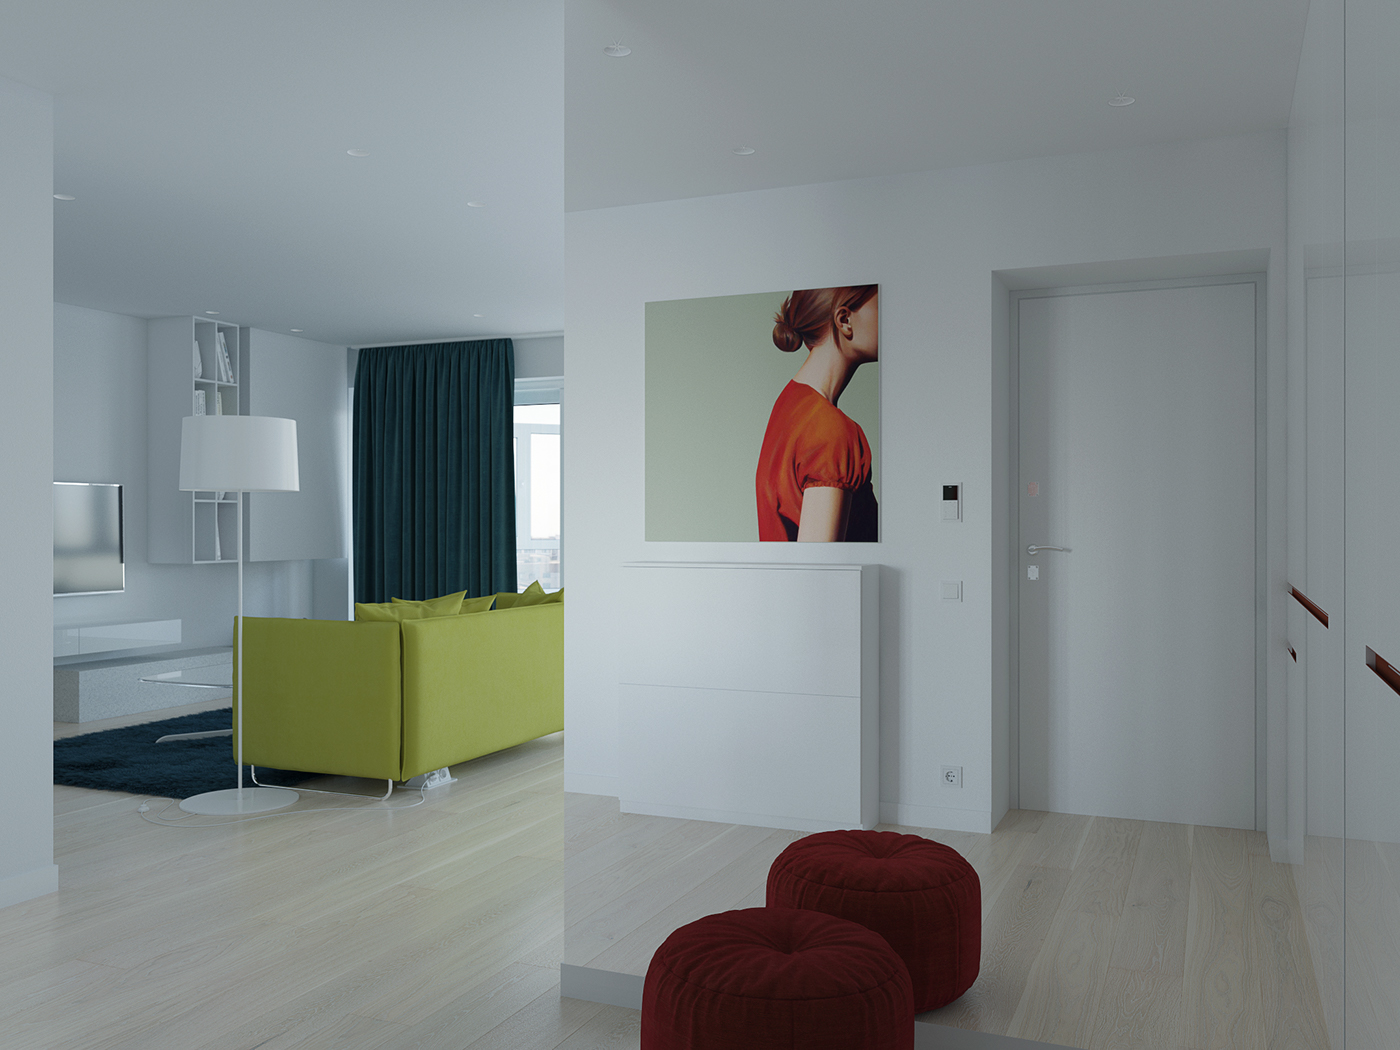 3ds max corona renderer Interior interior design  arch viz Render 3D Archivz studio